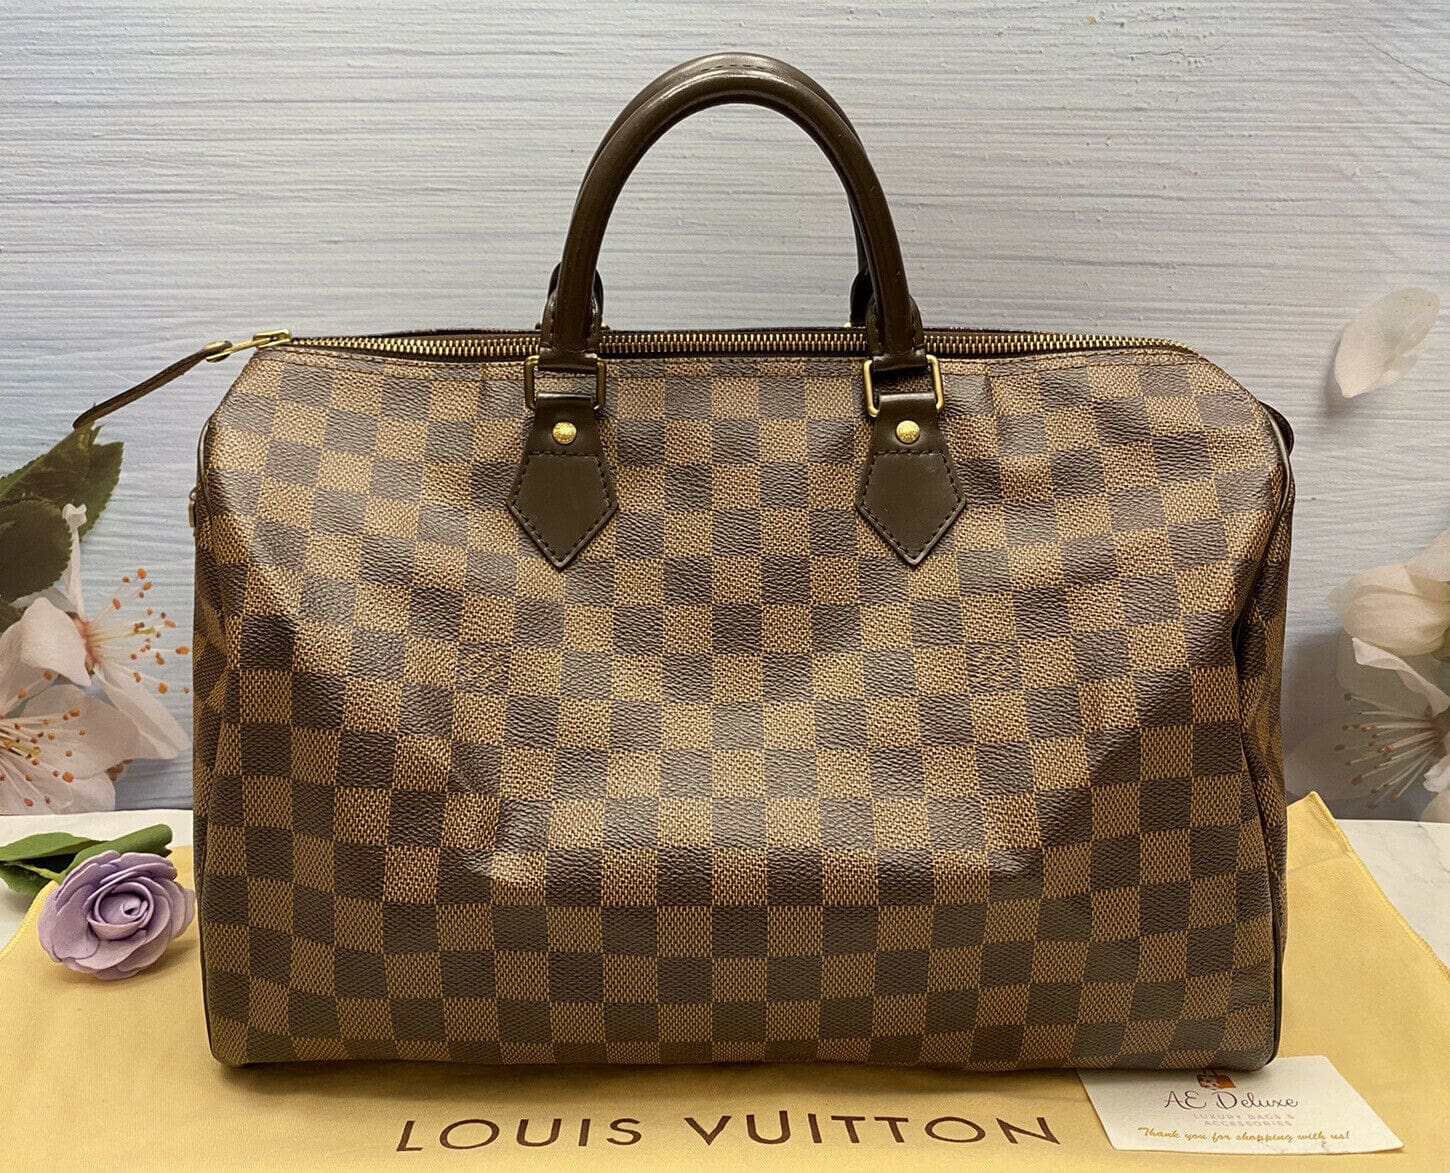 Louis Vuitton Speedy 35 Damier Ebene Leather Brown Handbag  eBay